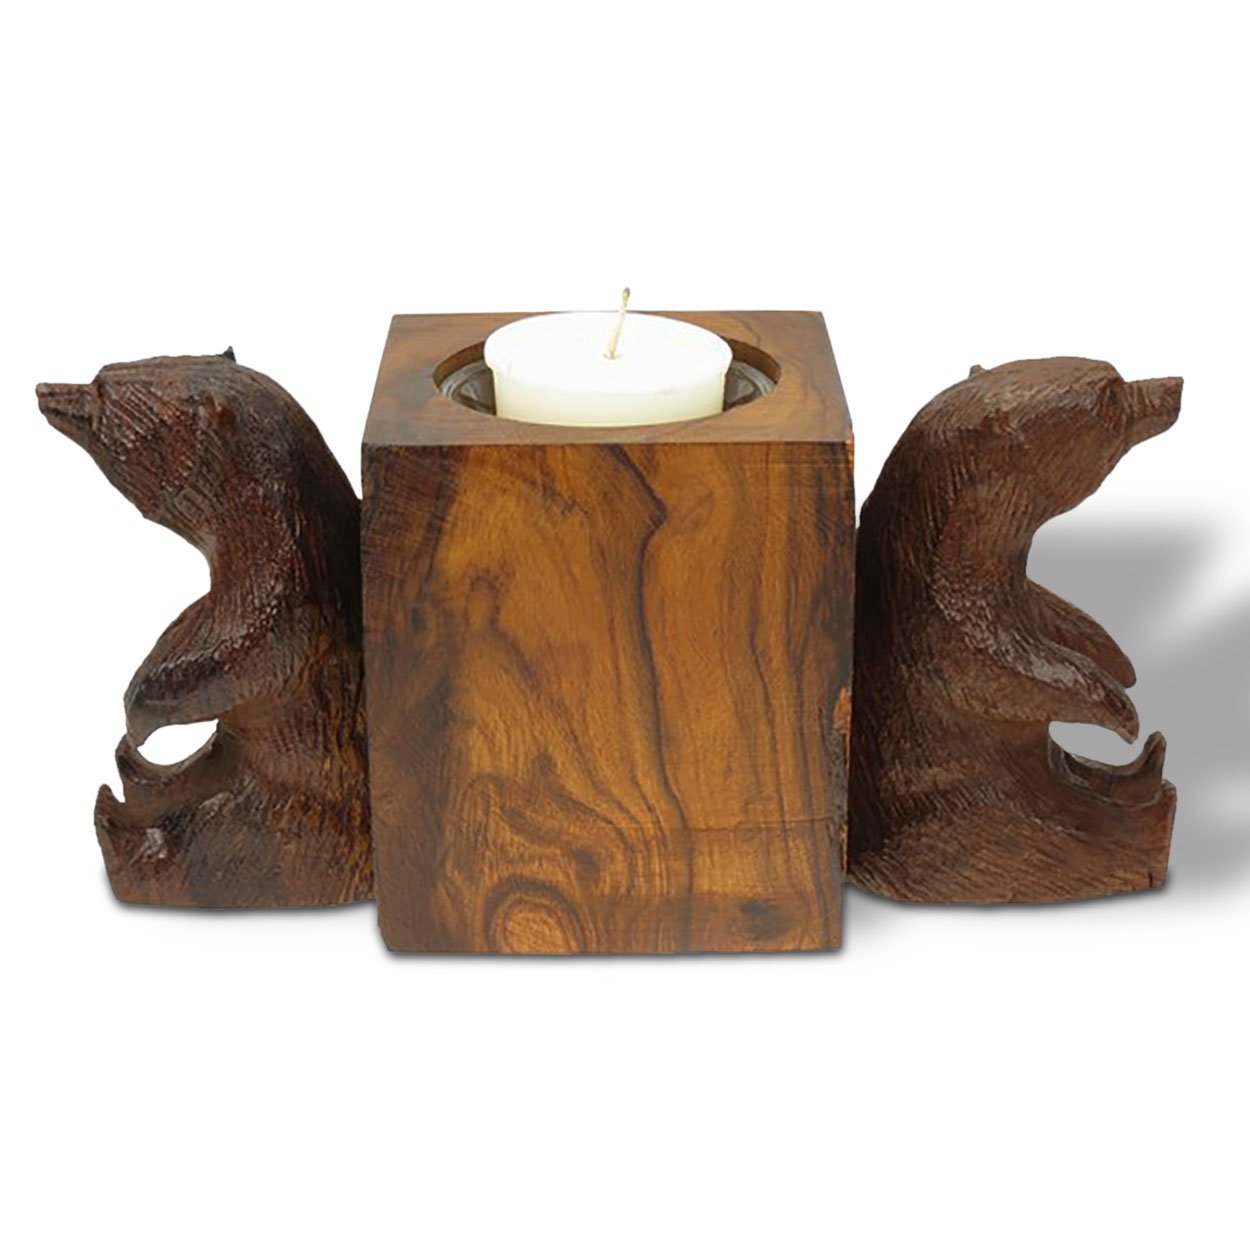 172026 - Bears Sitting Carved Ironwood Candle Holder